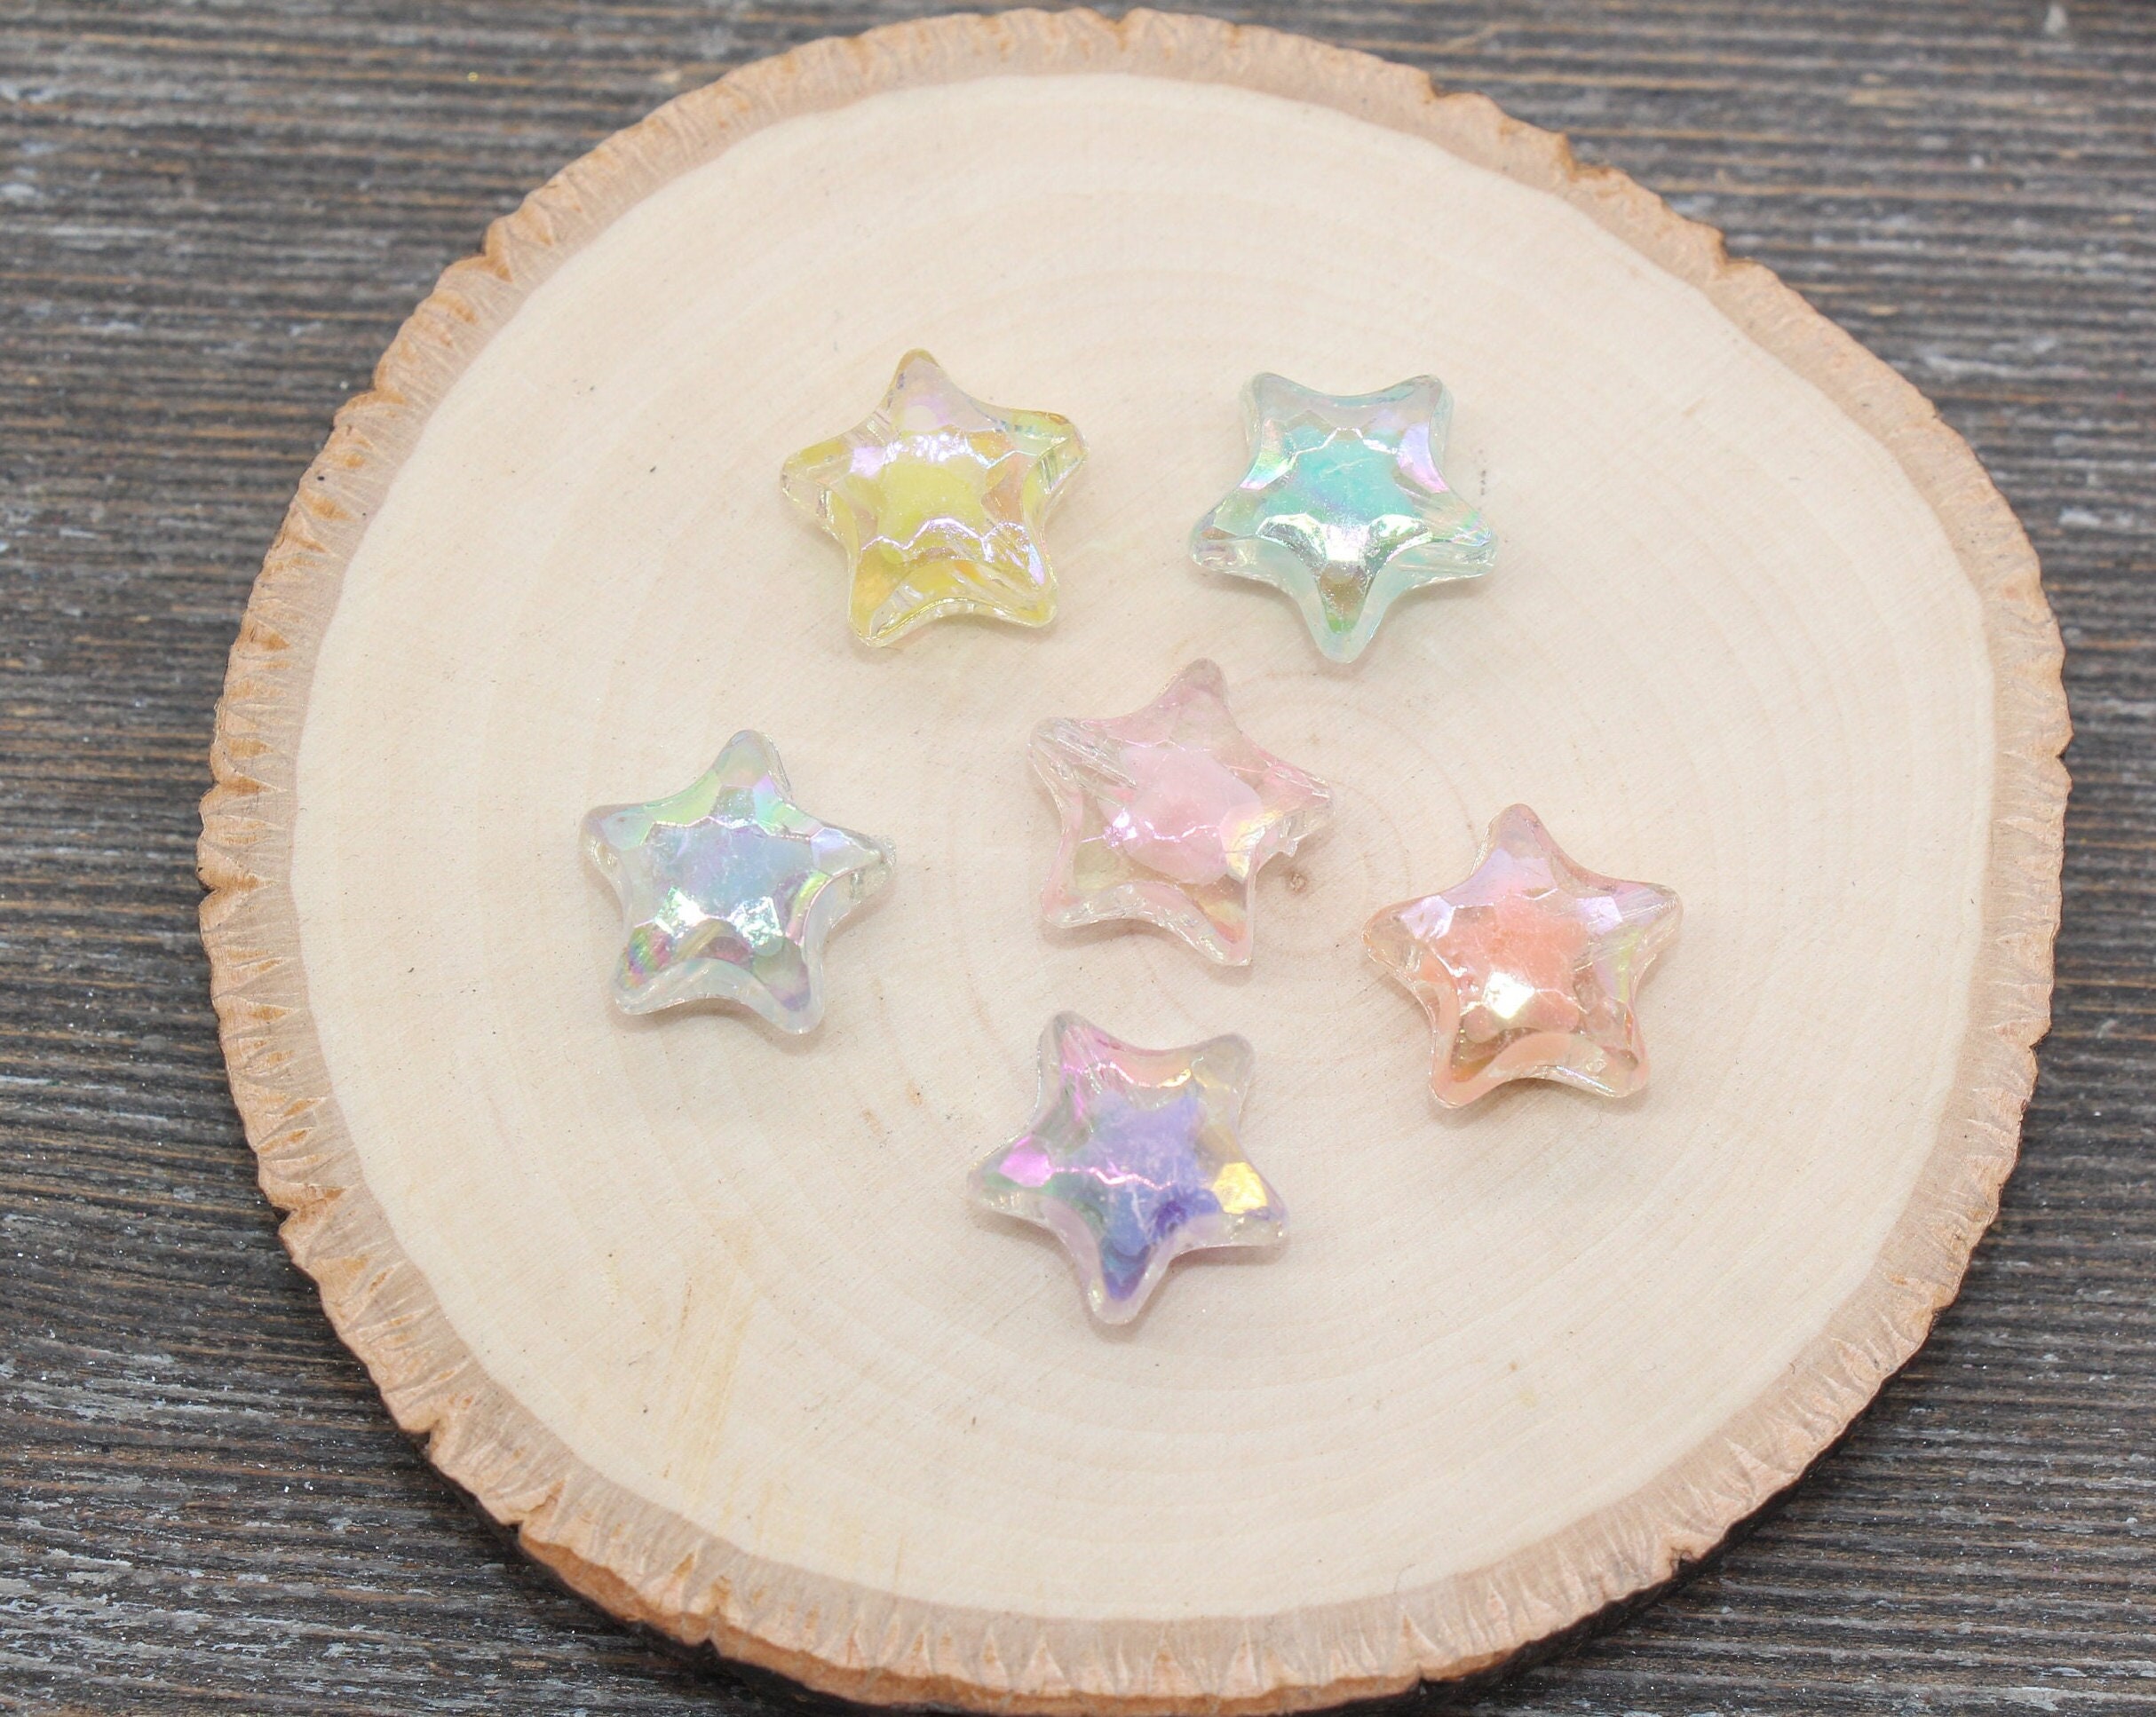 Translucent Multicolored Star Beads, Rainbow Acrylic Star Beads, Plastic  Colorful Star Beads, Star Shaped Beads, 2721 